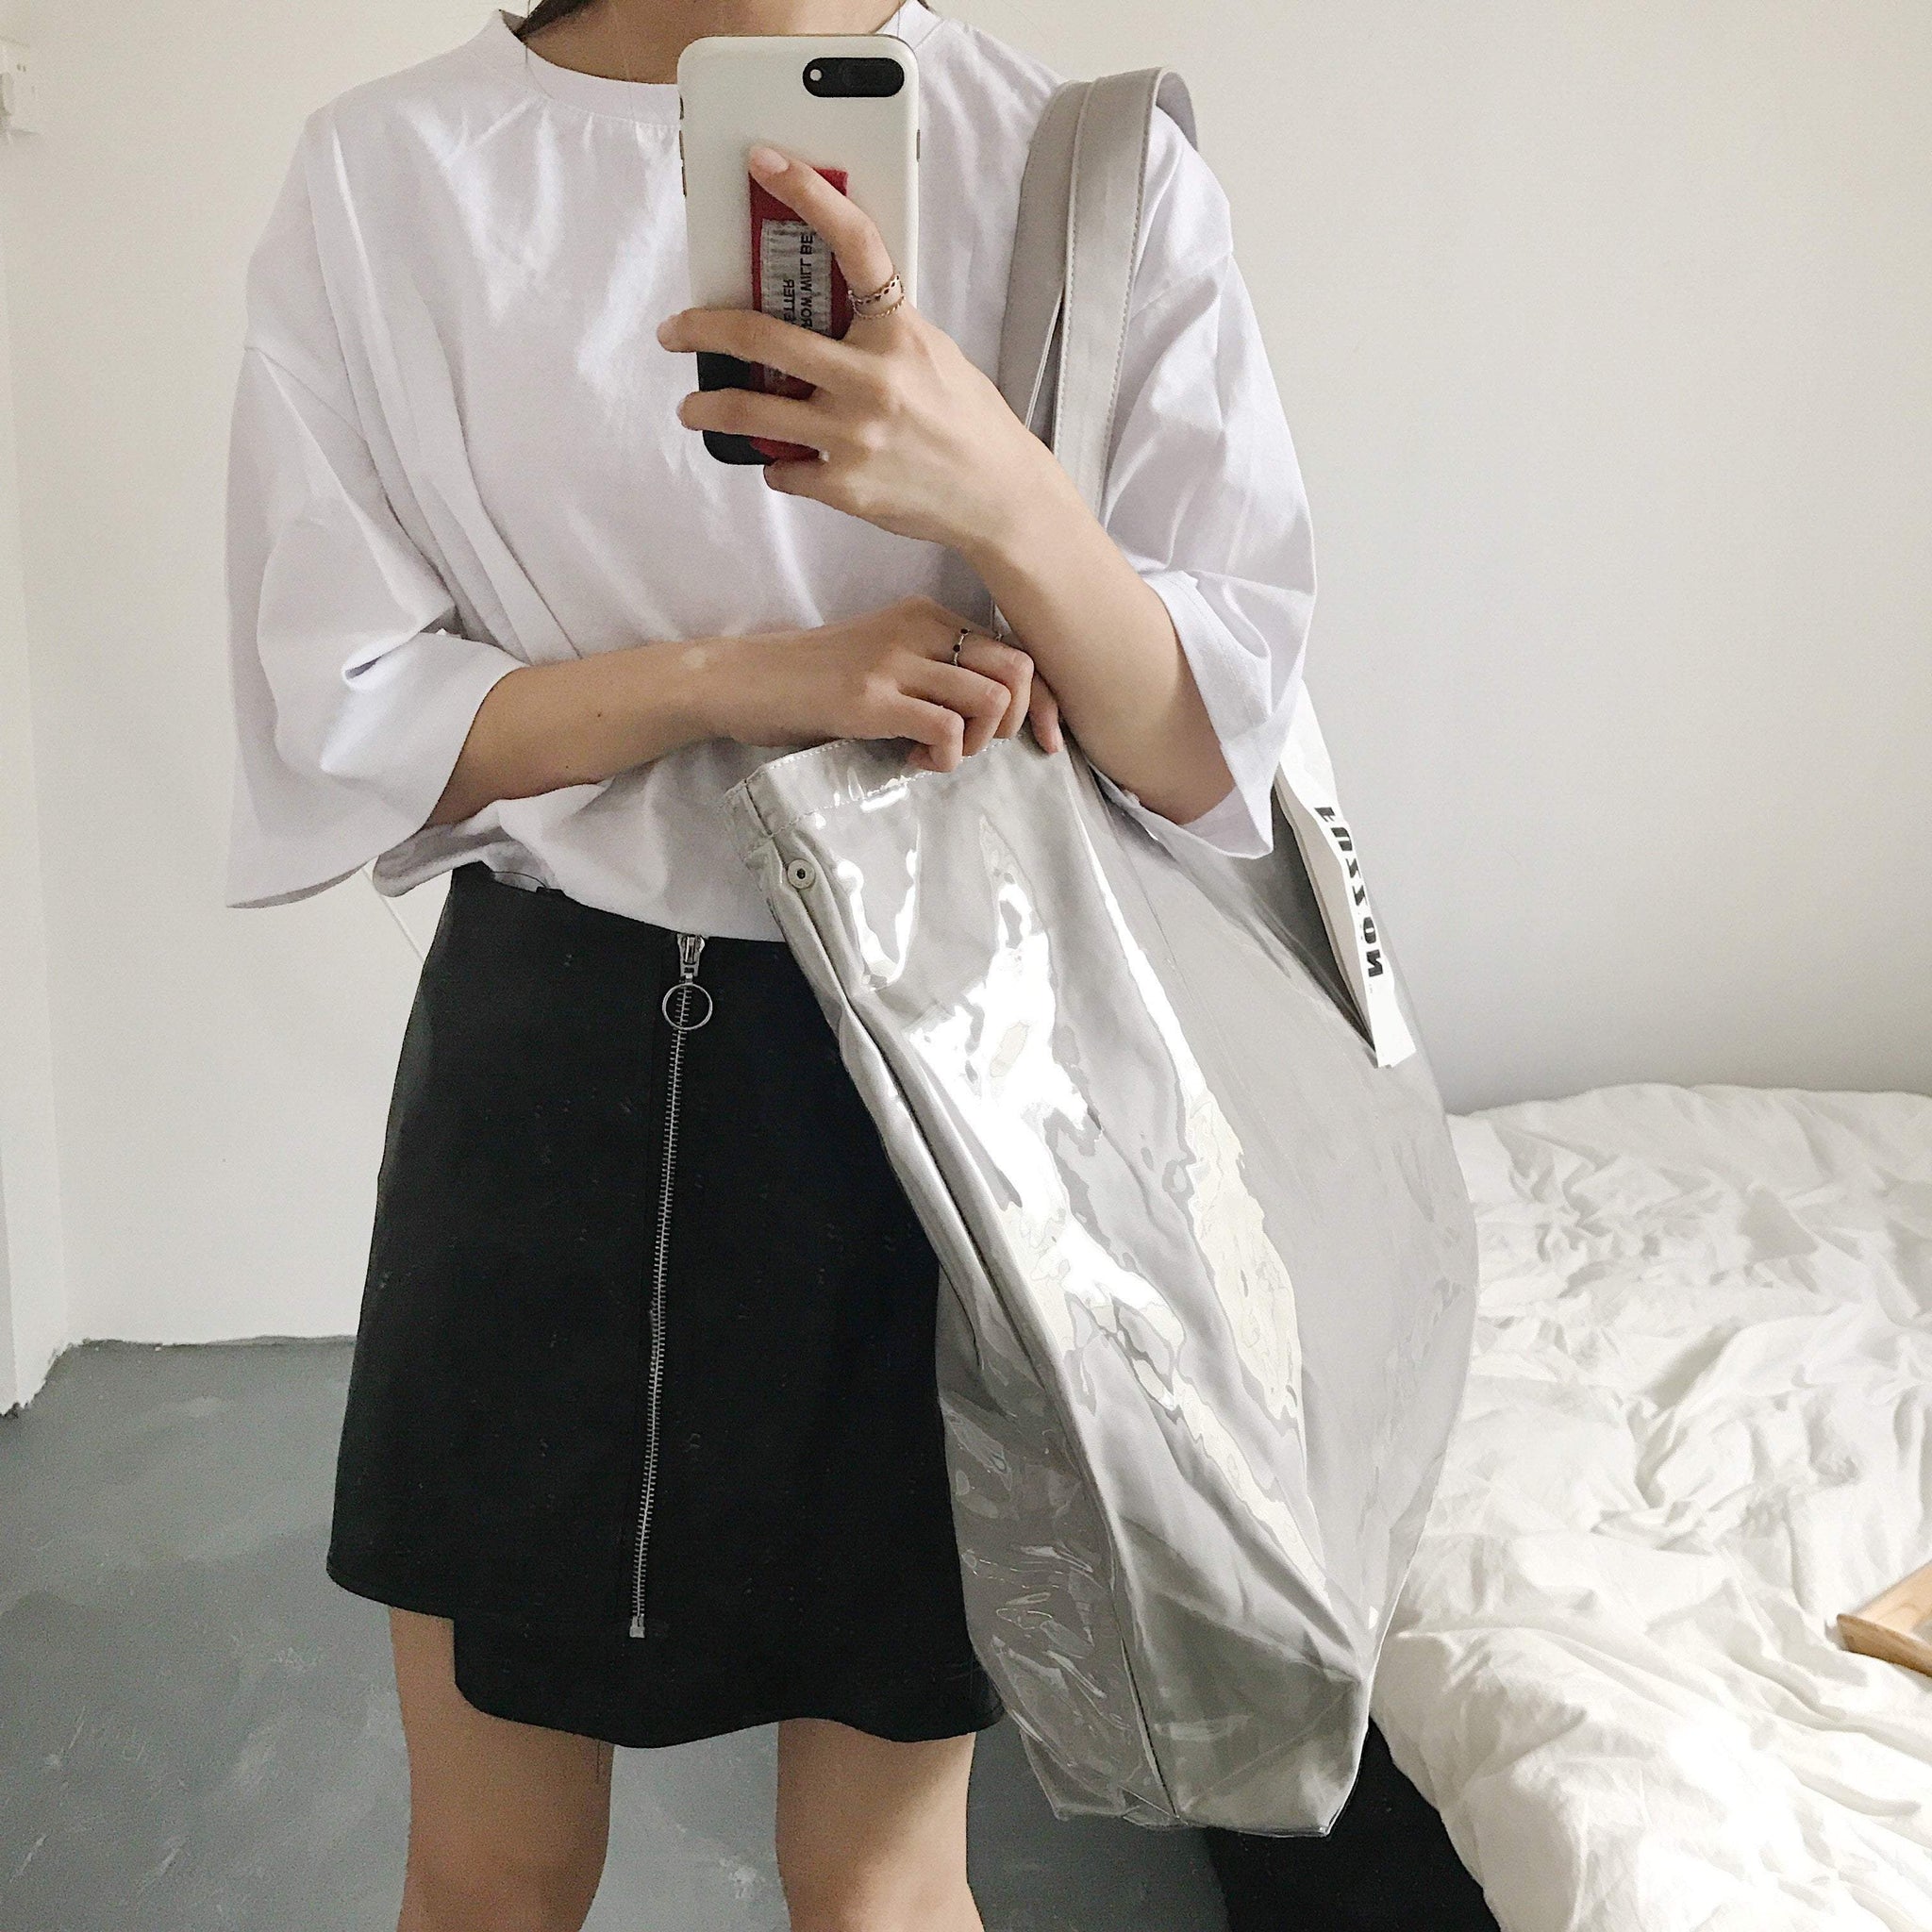 Silver Waterproof Tumblr Large Shoulder Bag